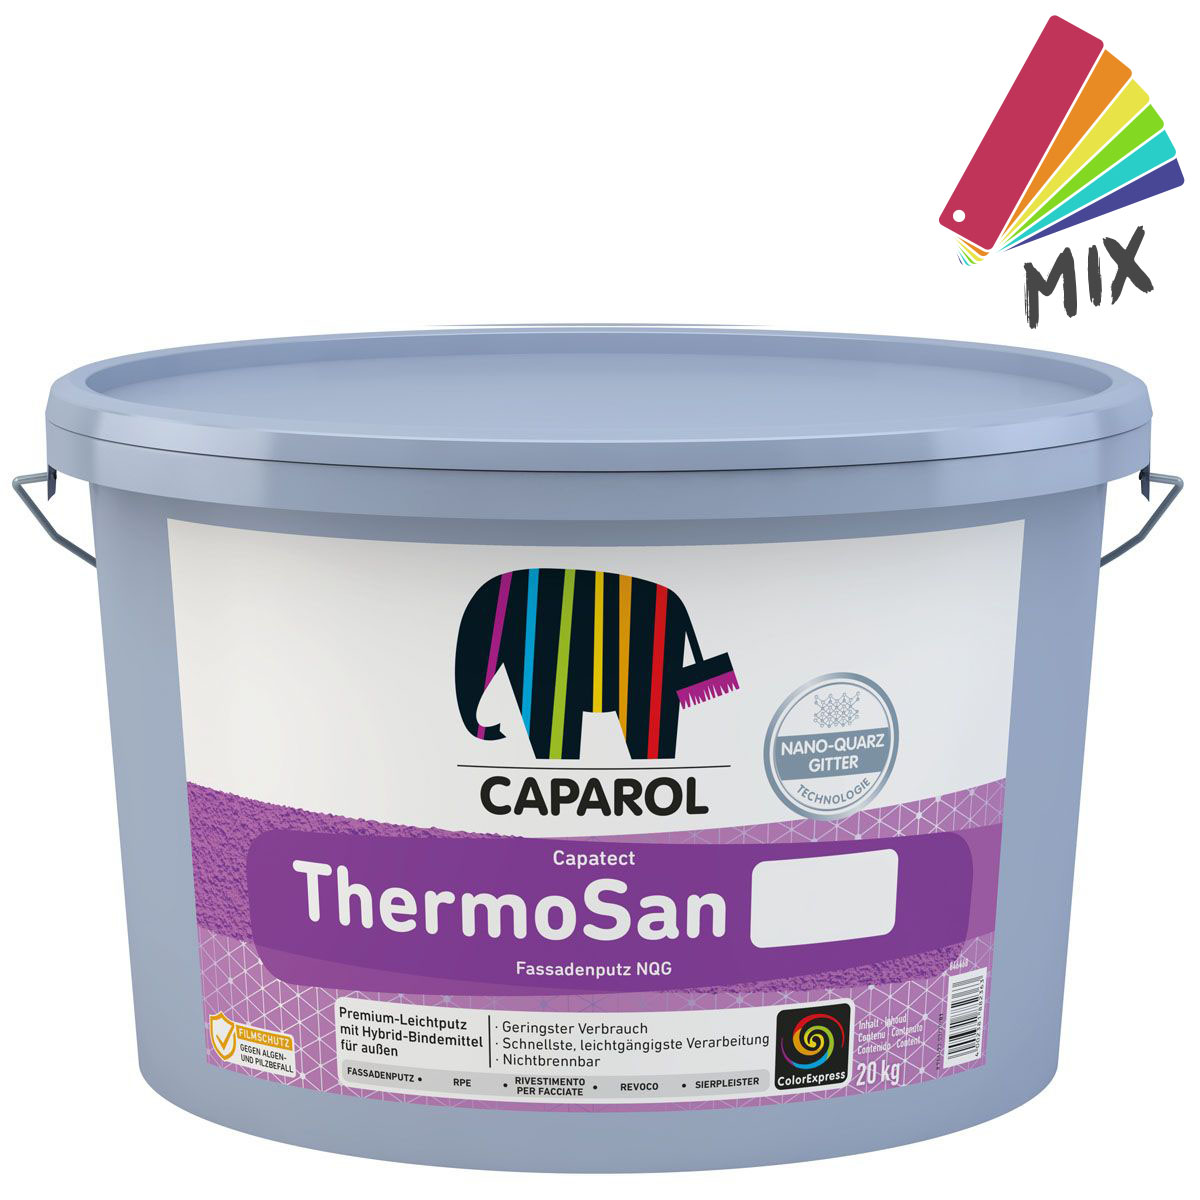 Caparol Capatect Thermosan Fassadenputz NQG K30 (3mm) 20kg, PG S wunschfarbton